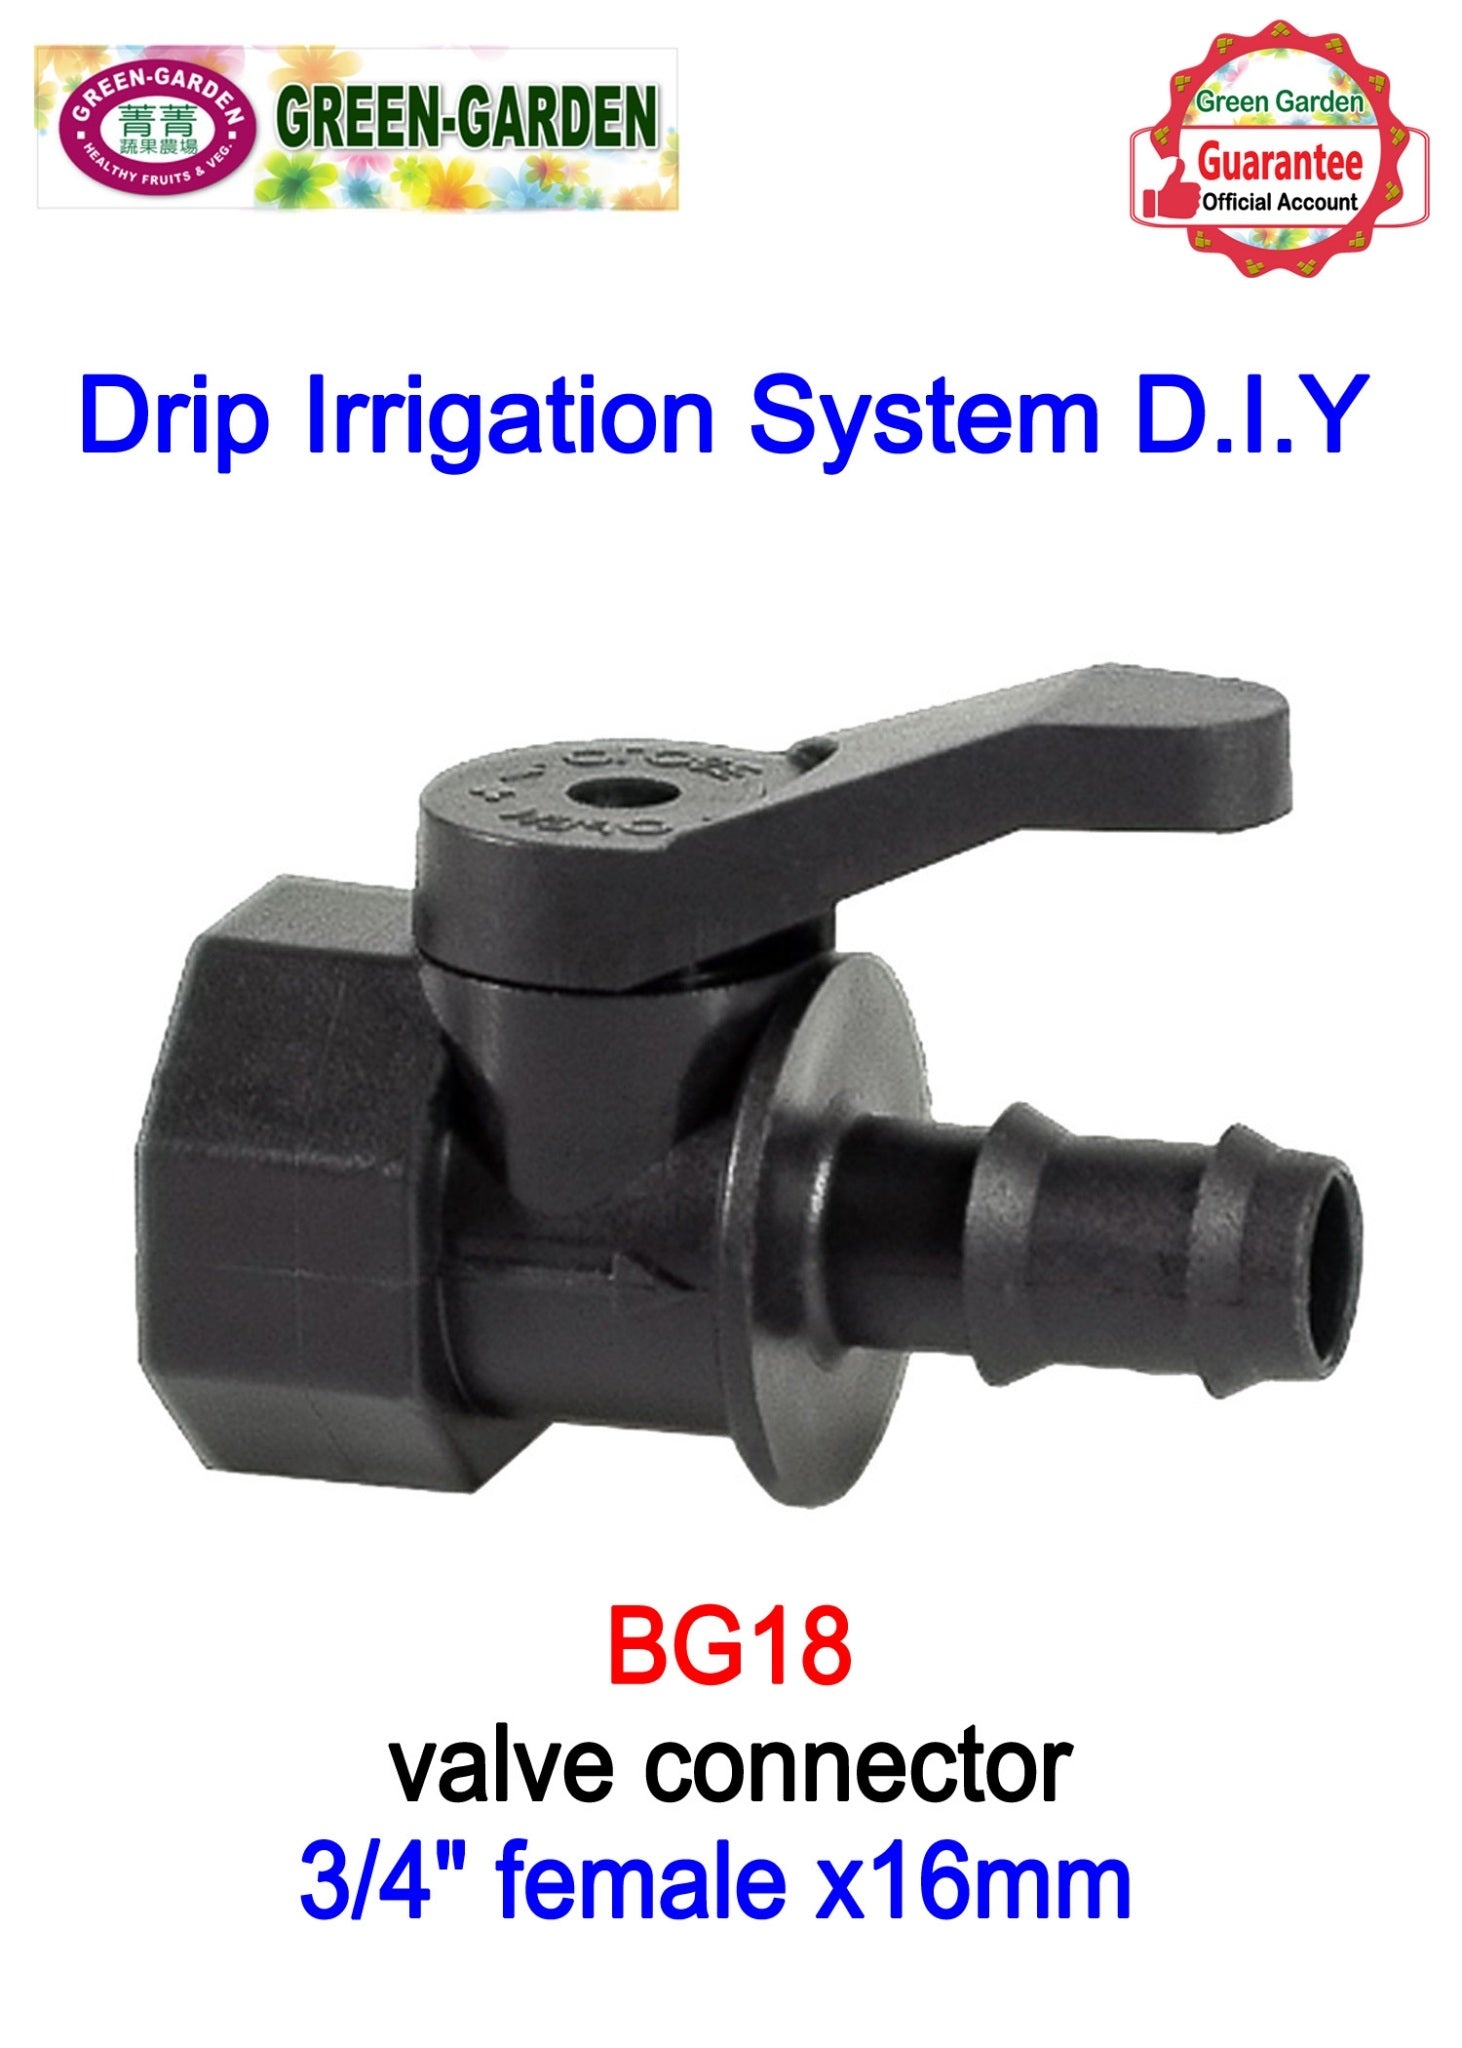 Drip Irrigation System - 3/4" female x 16mm valve connector BG18